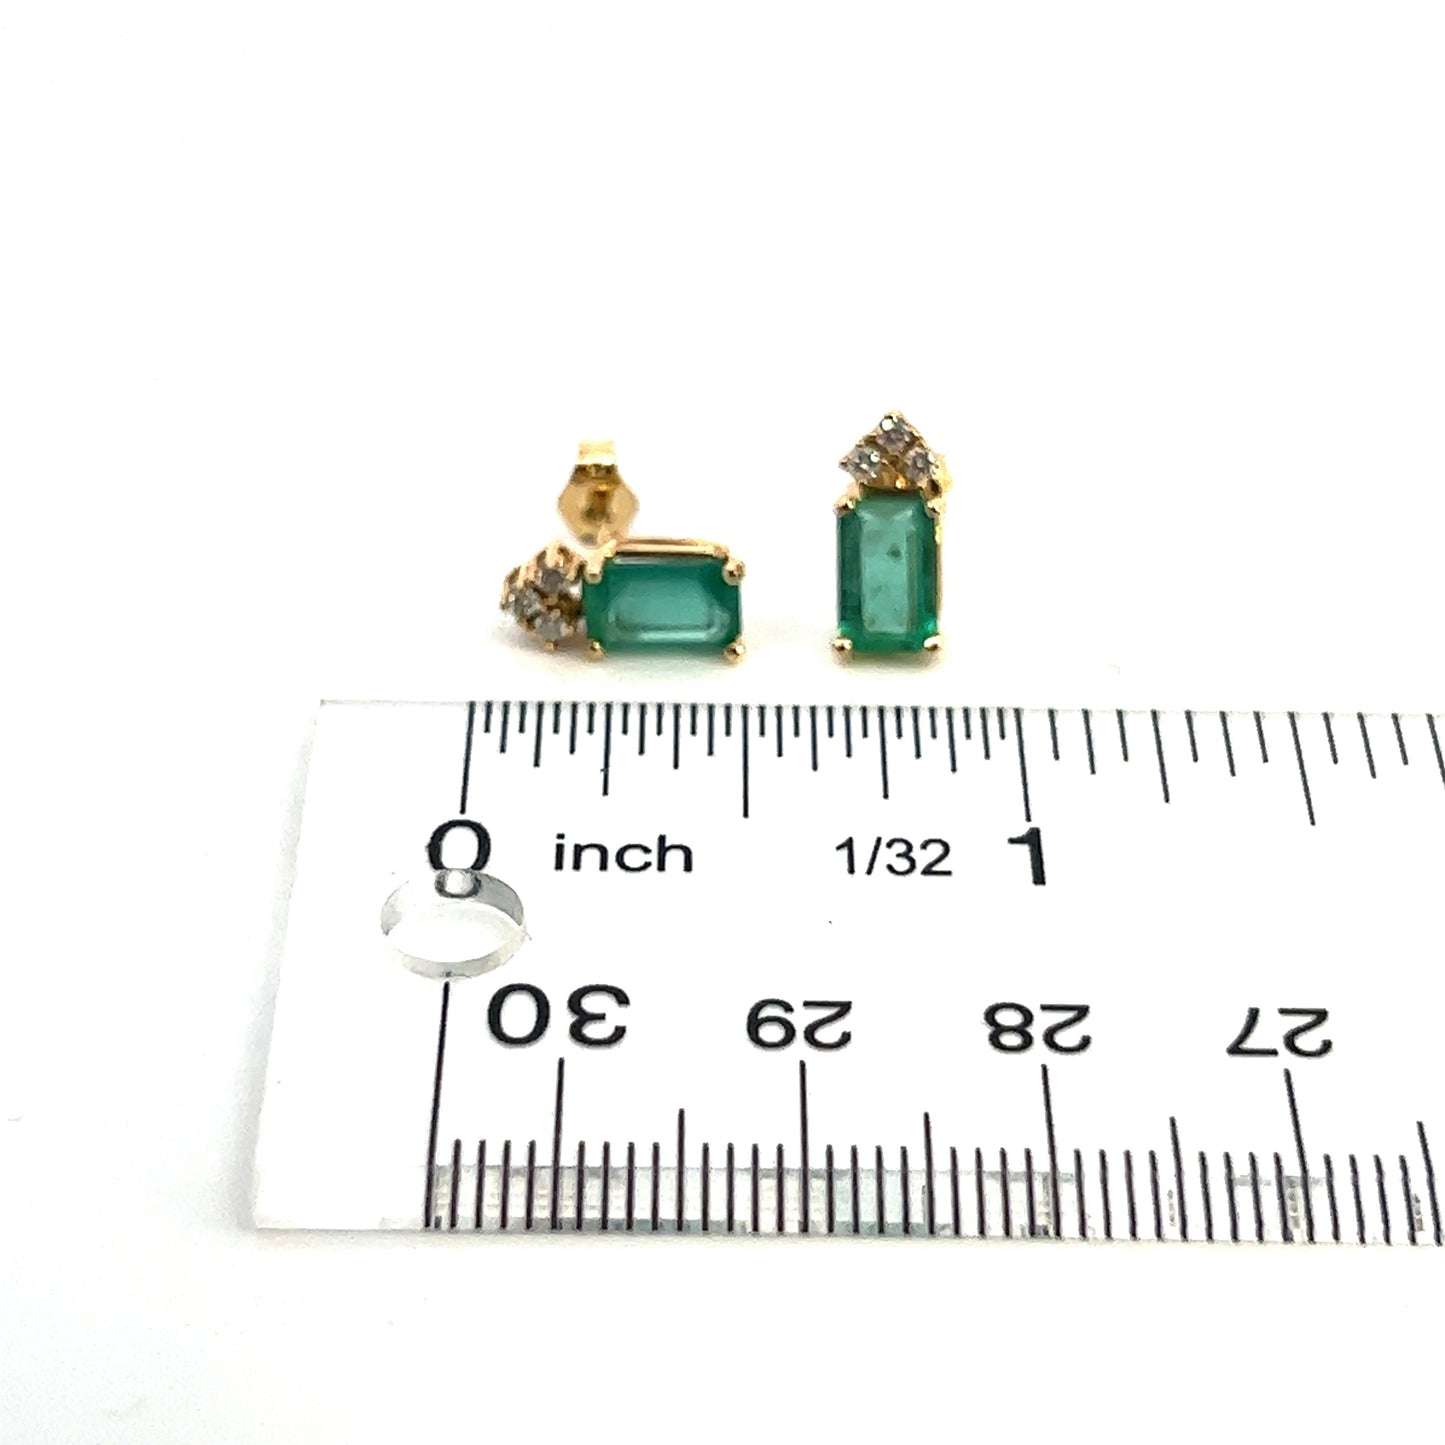 Natural Emerald Diamond Stud Earrings 14k Yellow Gold 1.59 TCW Certified $2,950 121167 - Certified Fine Jewelry